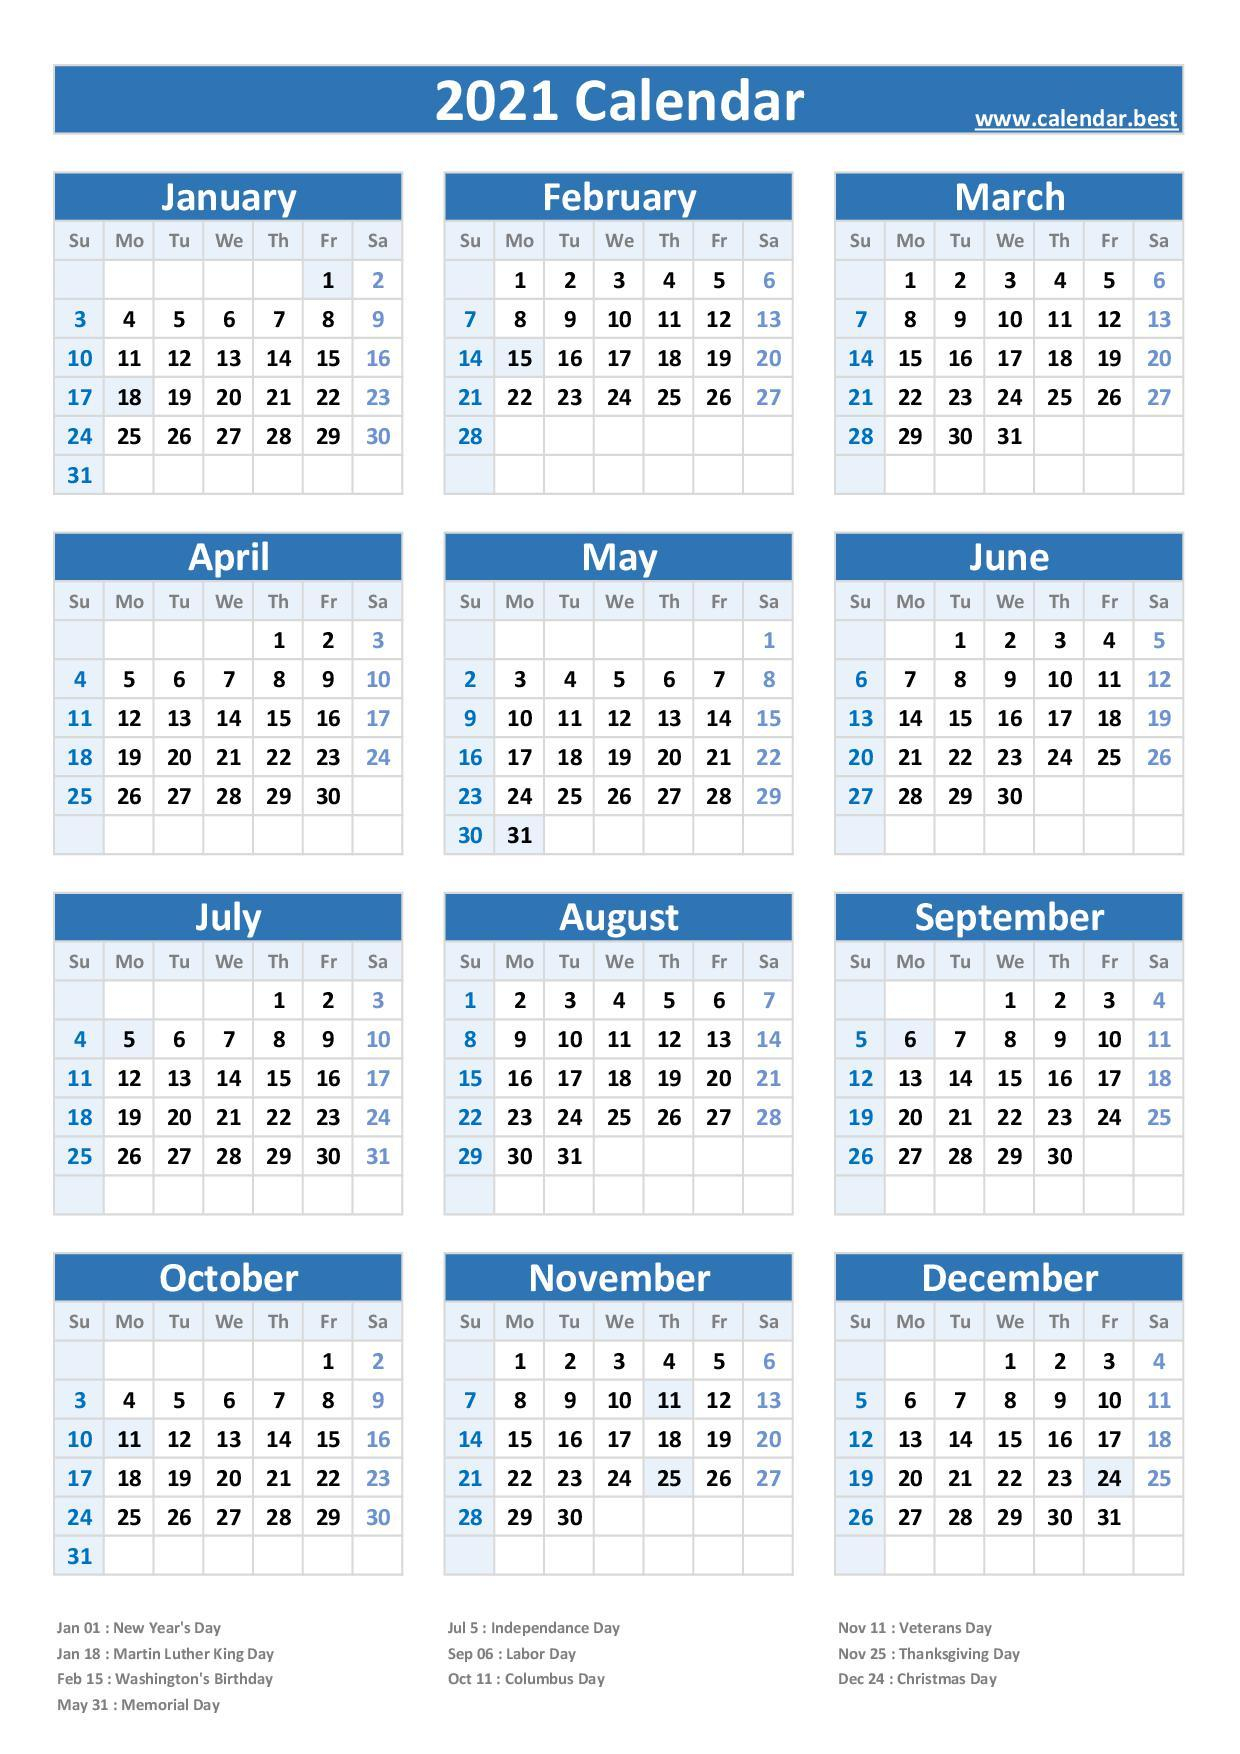 2021, 2022, 2023 Federal Holidays : List And Calendars